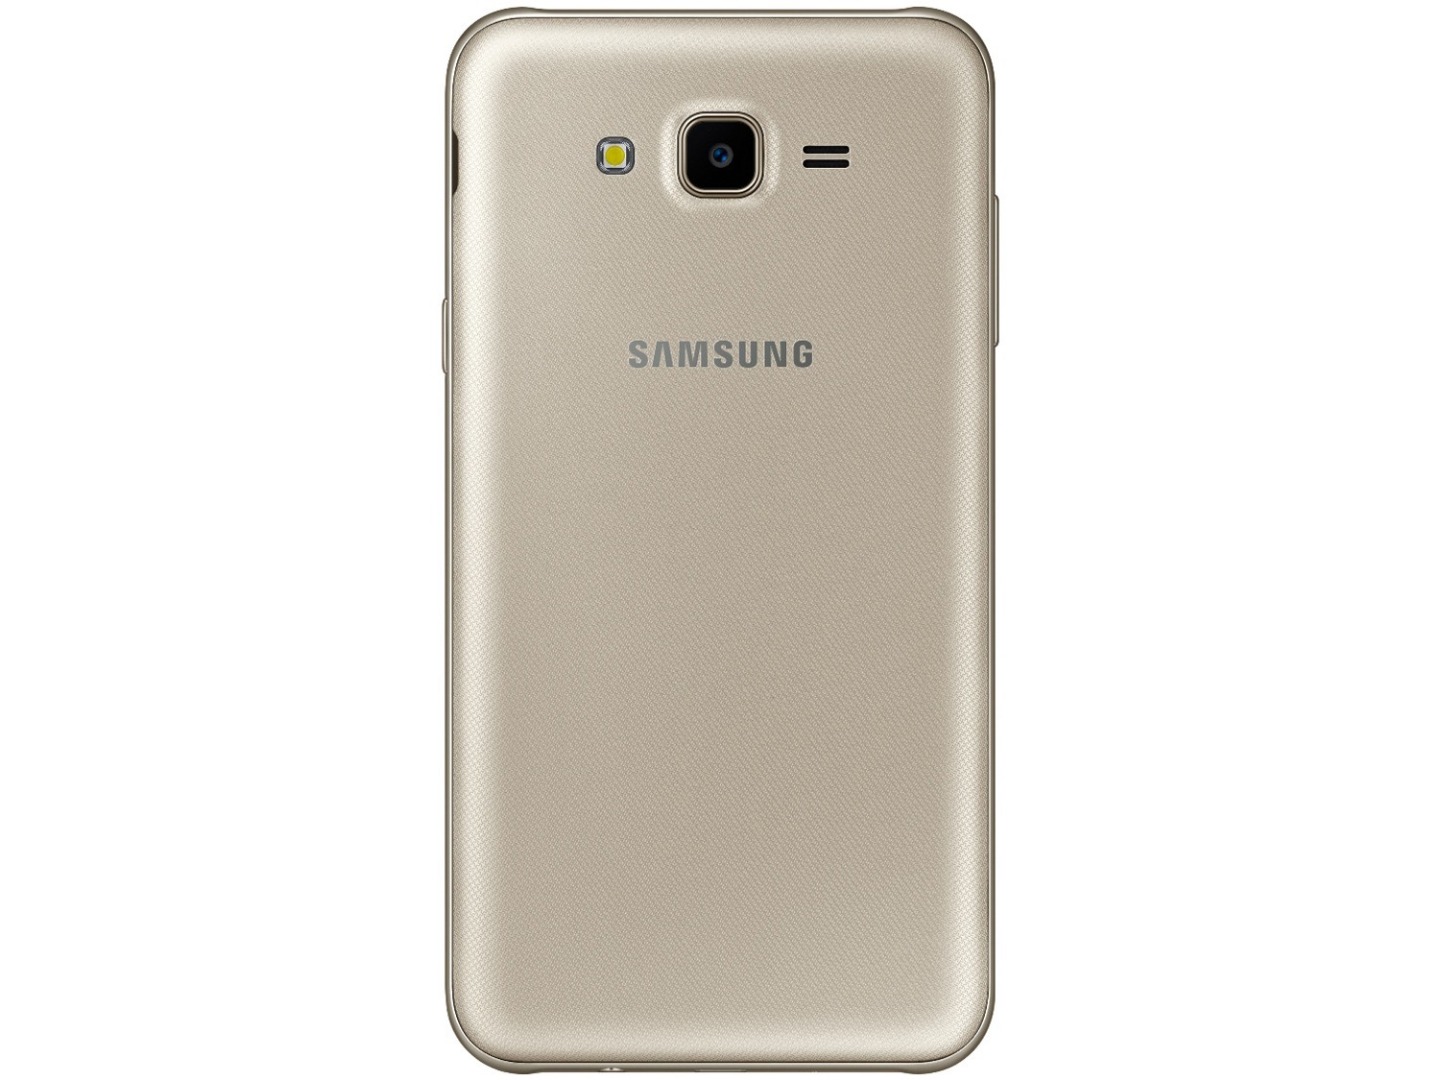 Smartphone Samsung Galaxy J7 Neo J701 TV Digital HD, Dual Chip,Tela 5.5, Câmera 13MP+5MP Frontal Flash LED, OctaCore 1.6GHz, 16GB, 2GB RAM, Android 7, Dourado